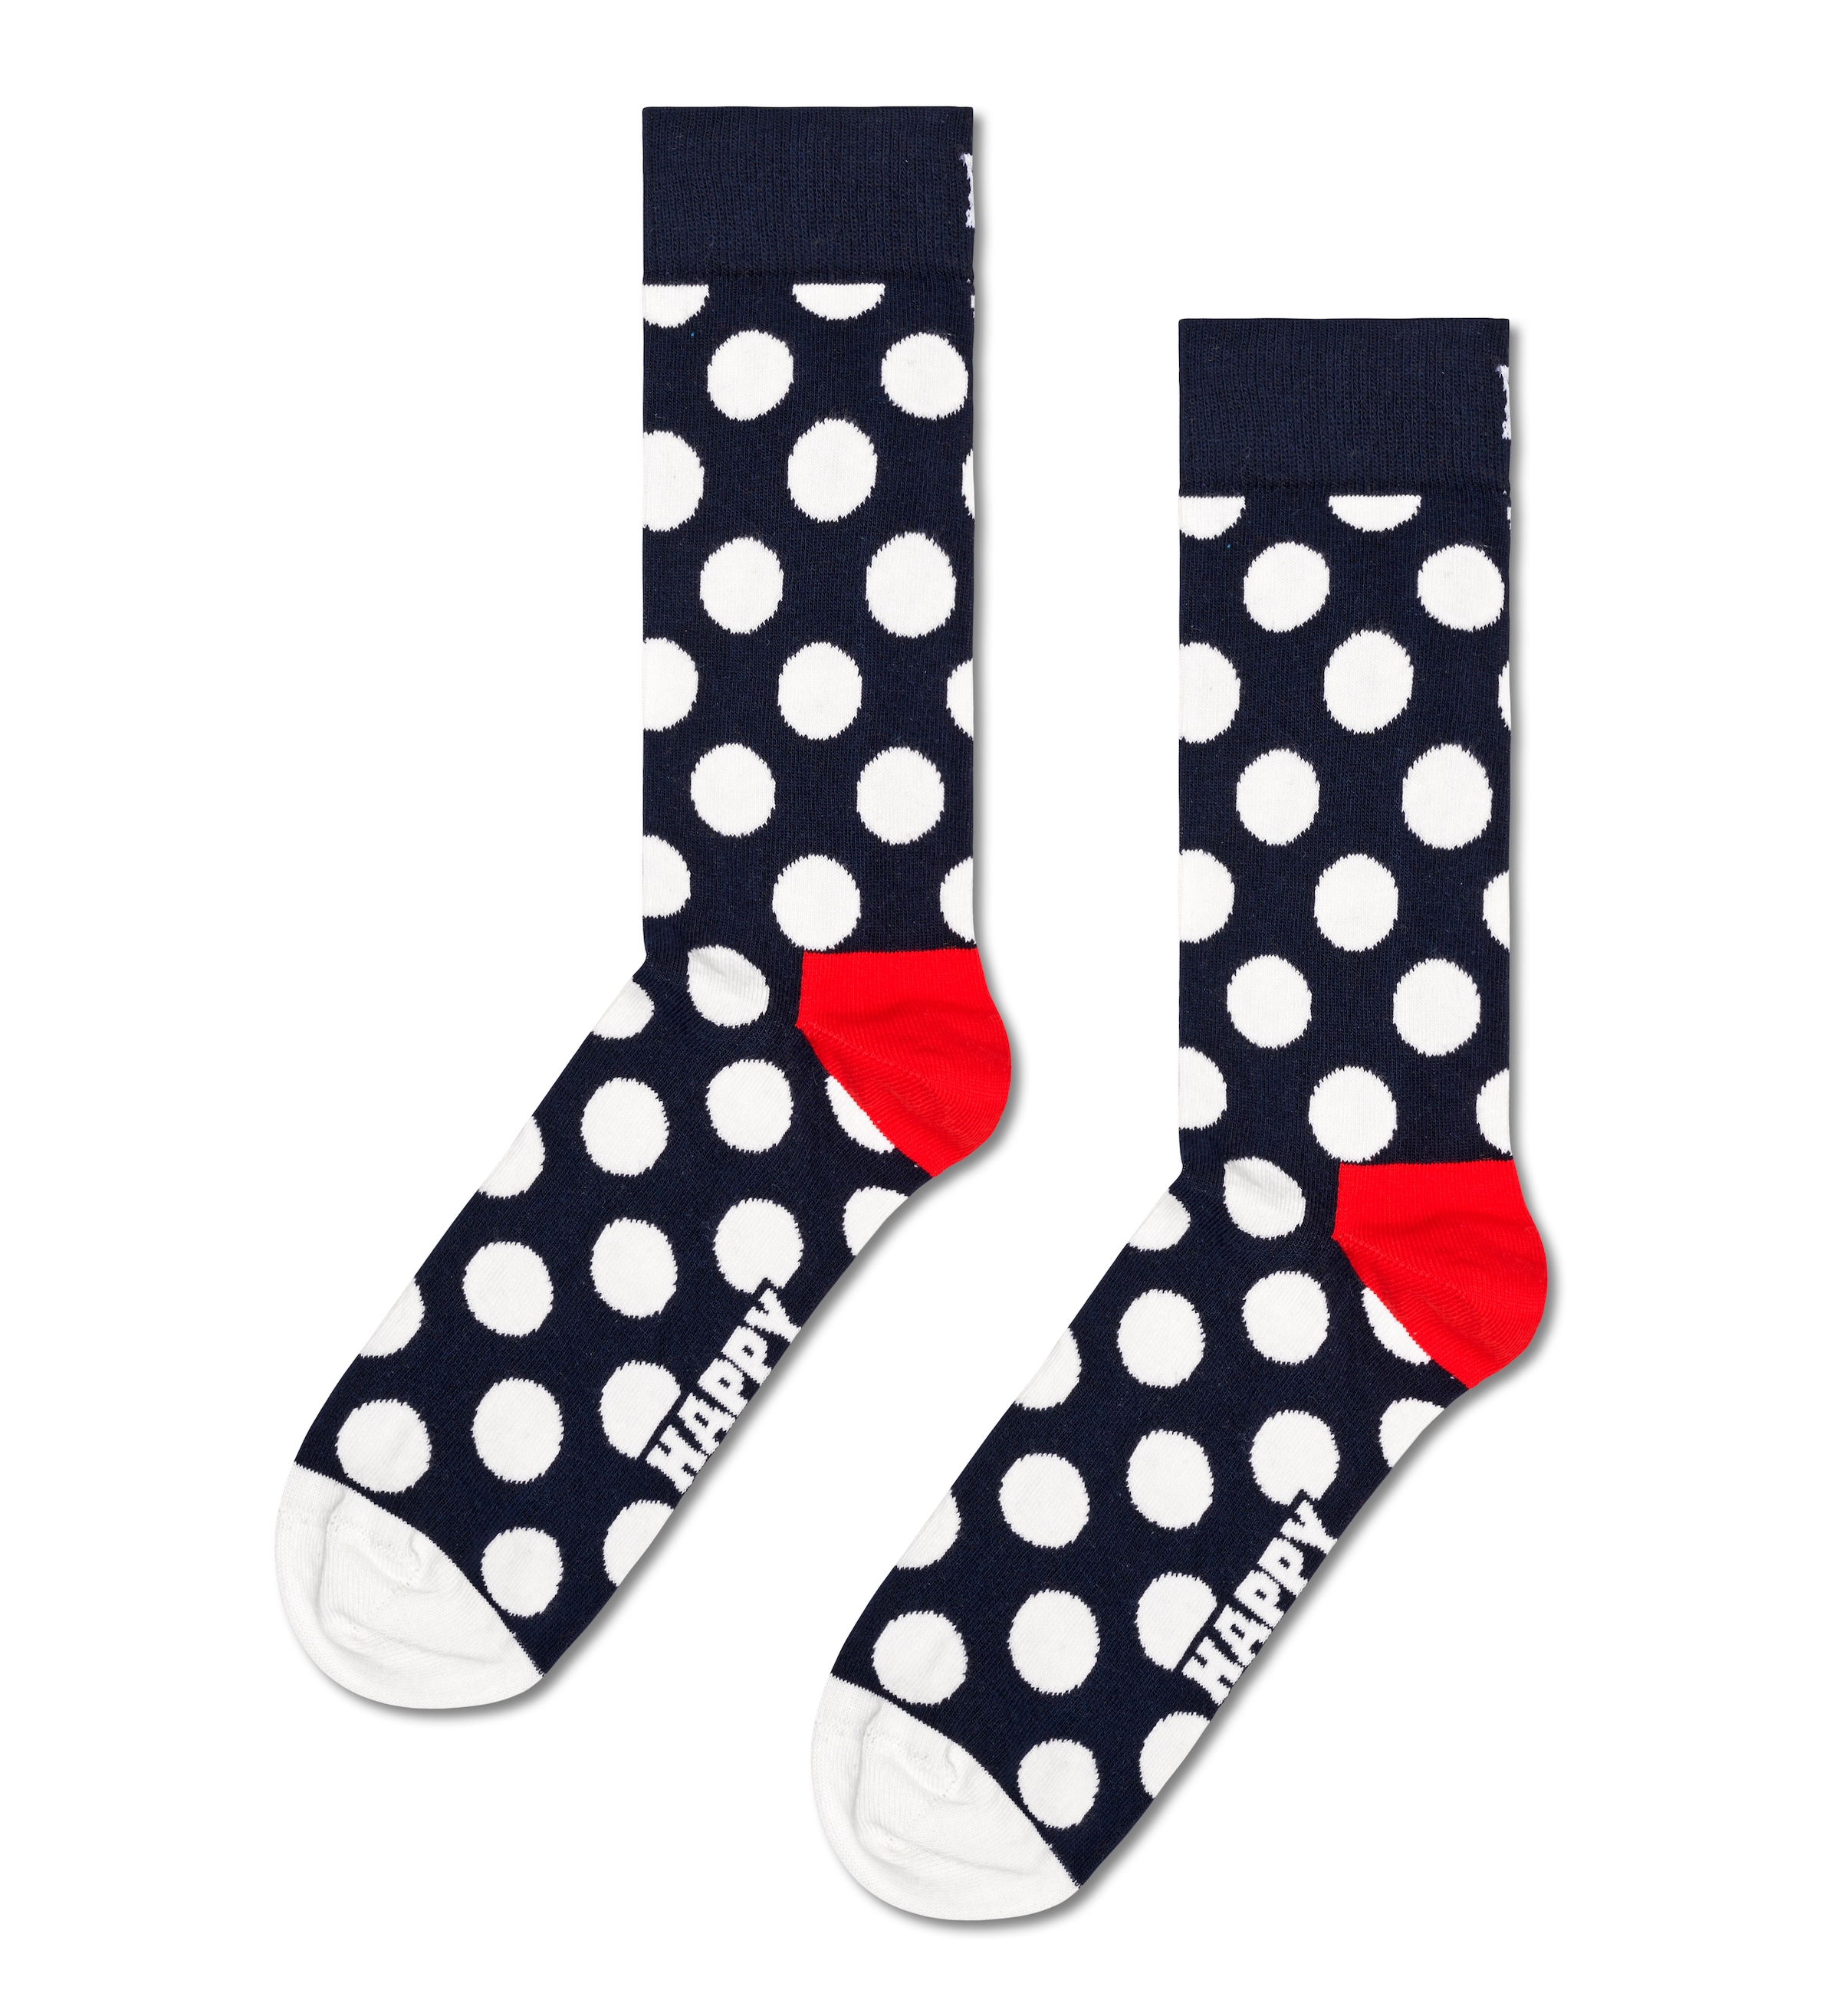 Happy Socks Socken, (Set, 3 Paar), mit verspielten Mustern